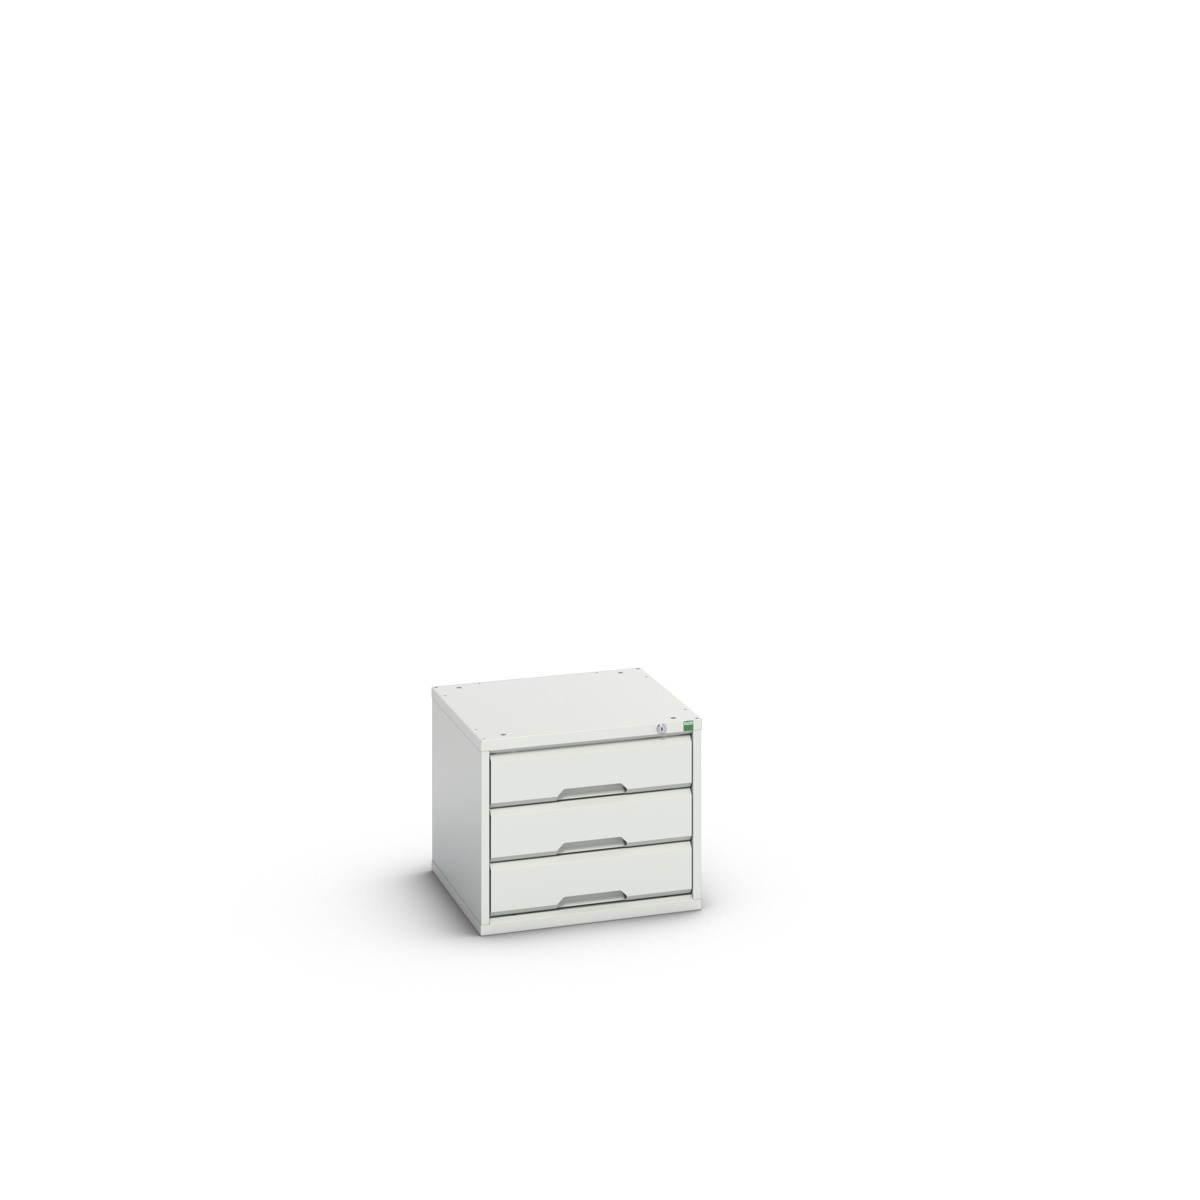 16925001.16 - verso drawer cabinet